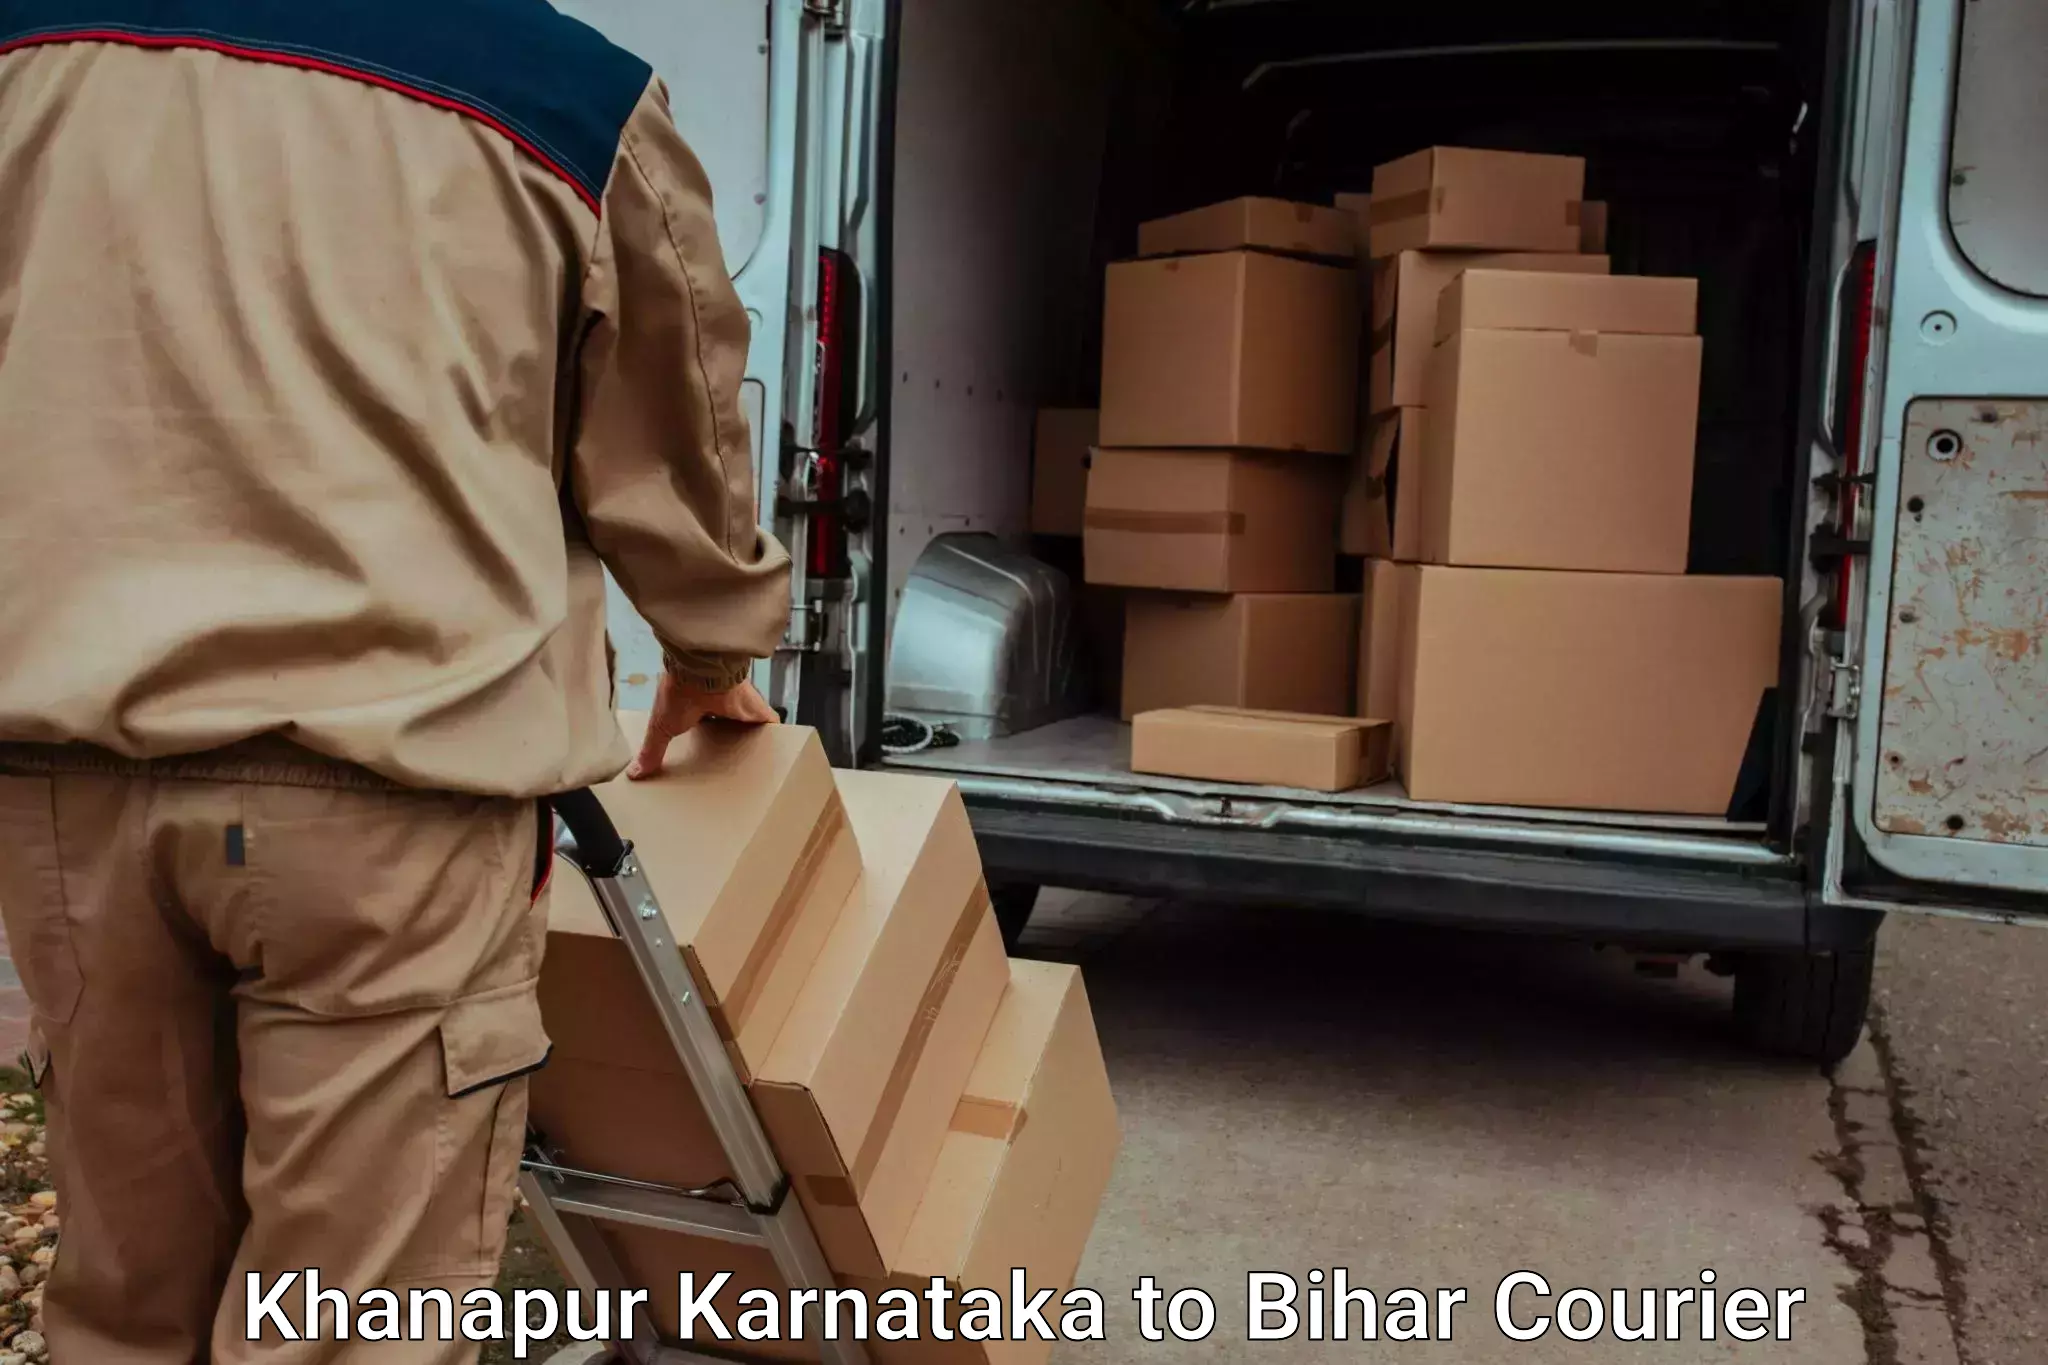 Baggage transport technology Khanapur Karnataka to Chandi Nalanda